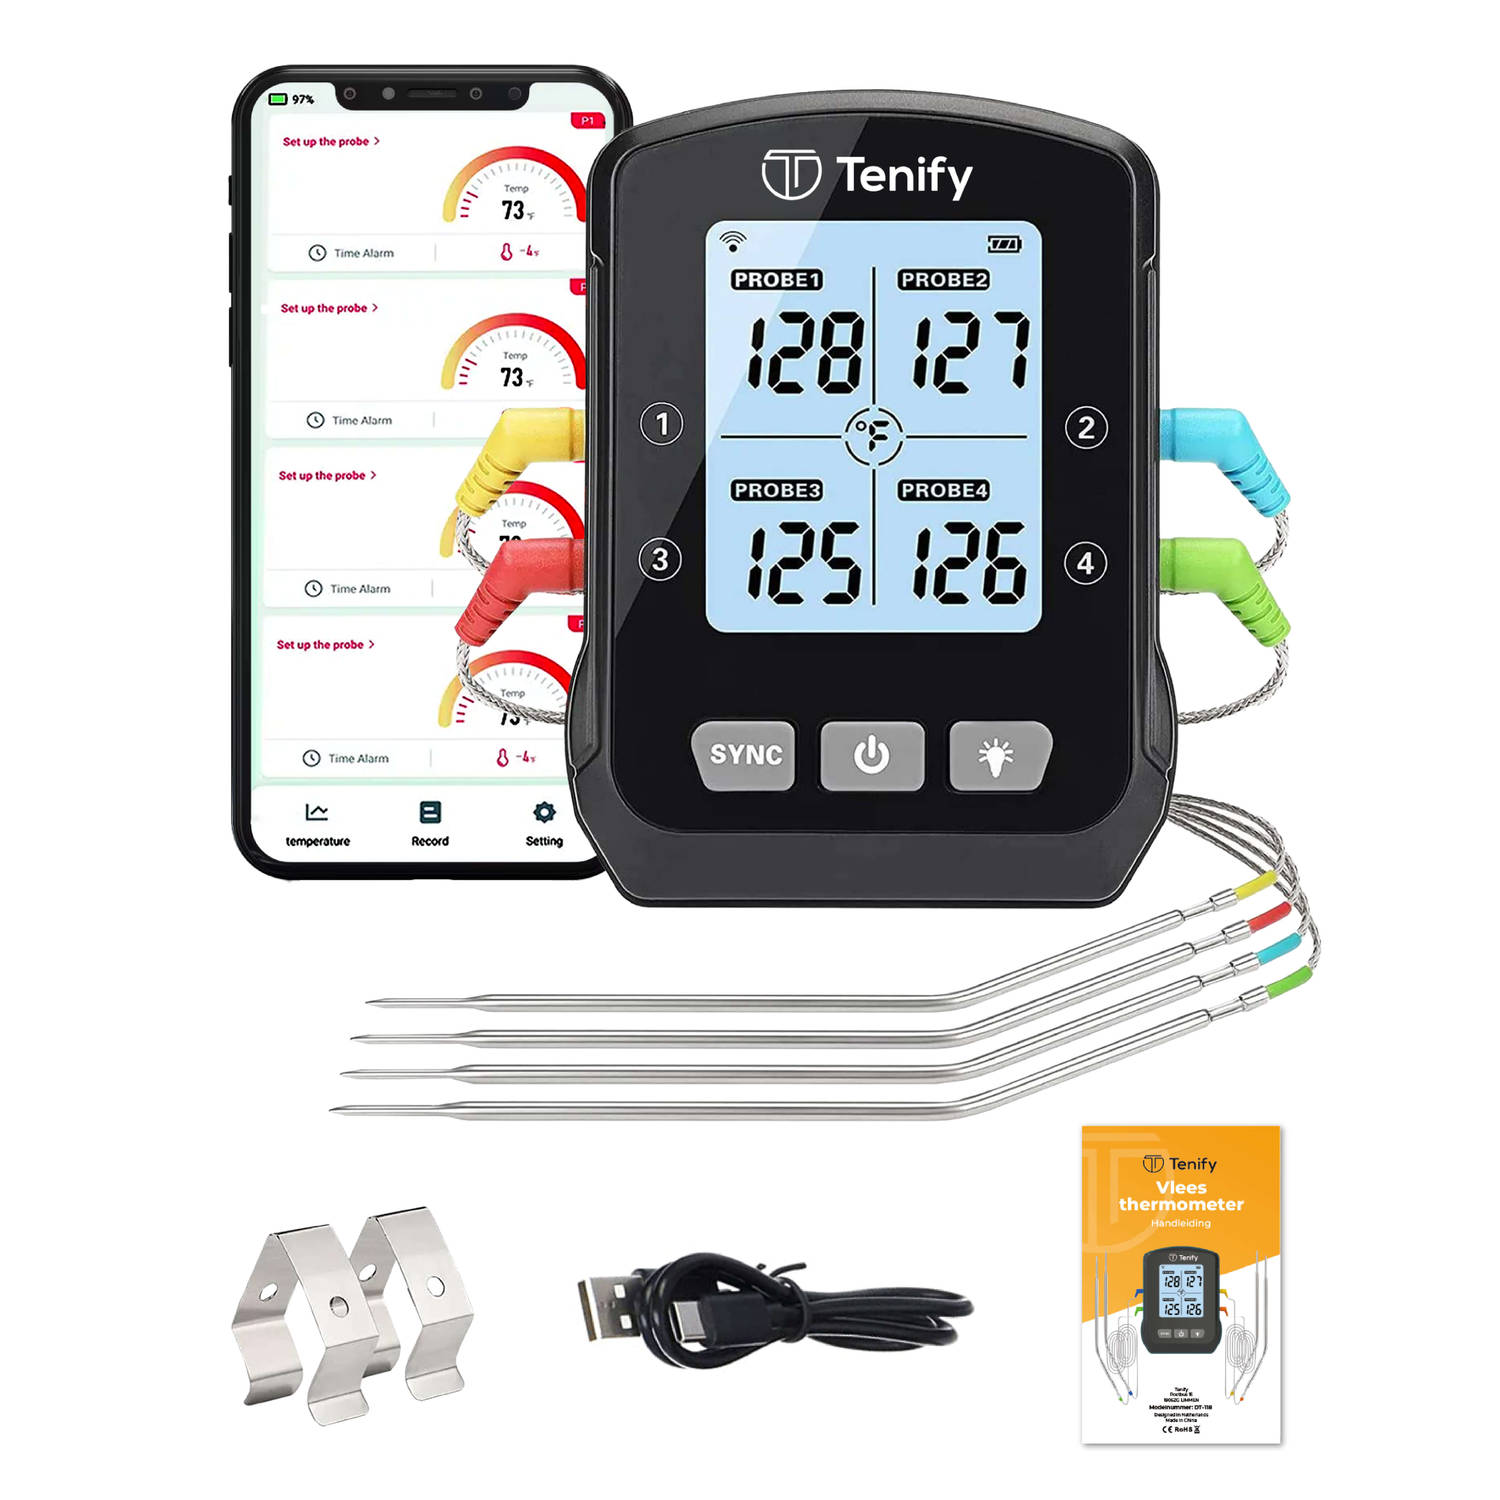 Tenify Vleesthermometer - Draadloos met Mobiele App -BBQ Thermometer - Bluetooth - Digitaal Keukenthermometer - Oventhermometer – Voedselthermometer (4 meetsondes)